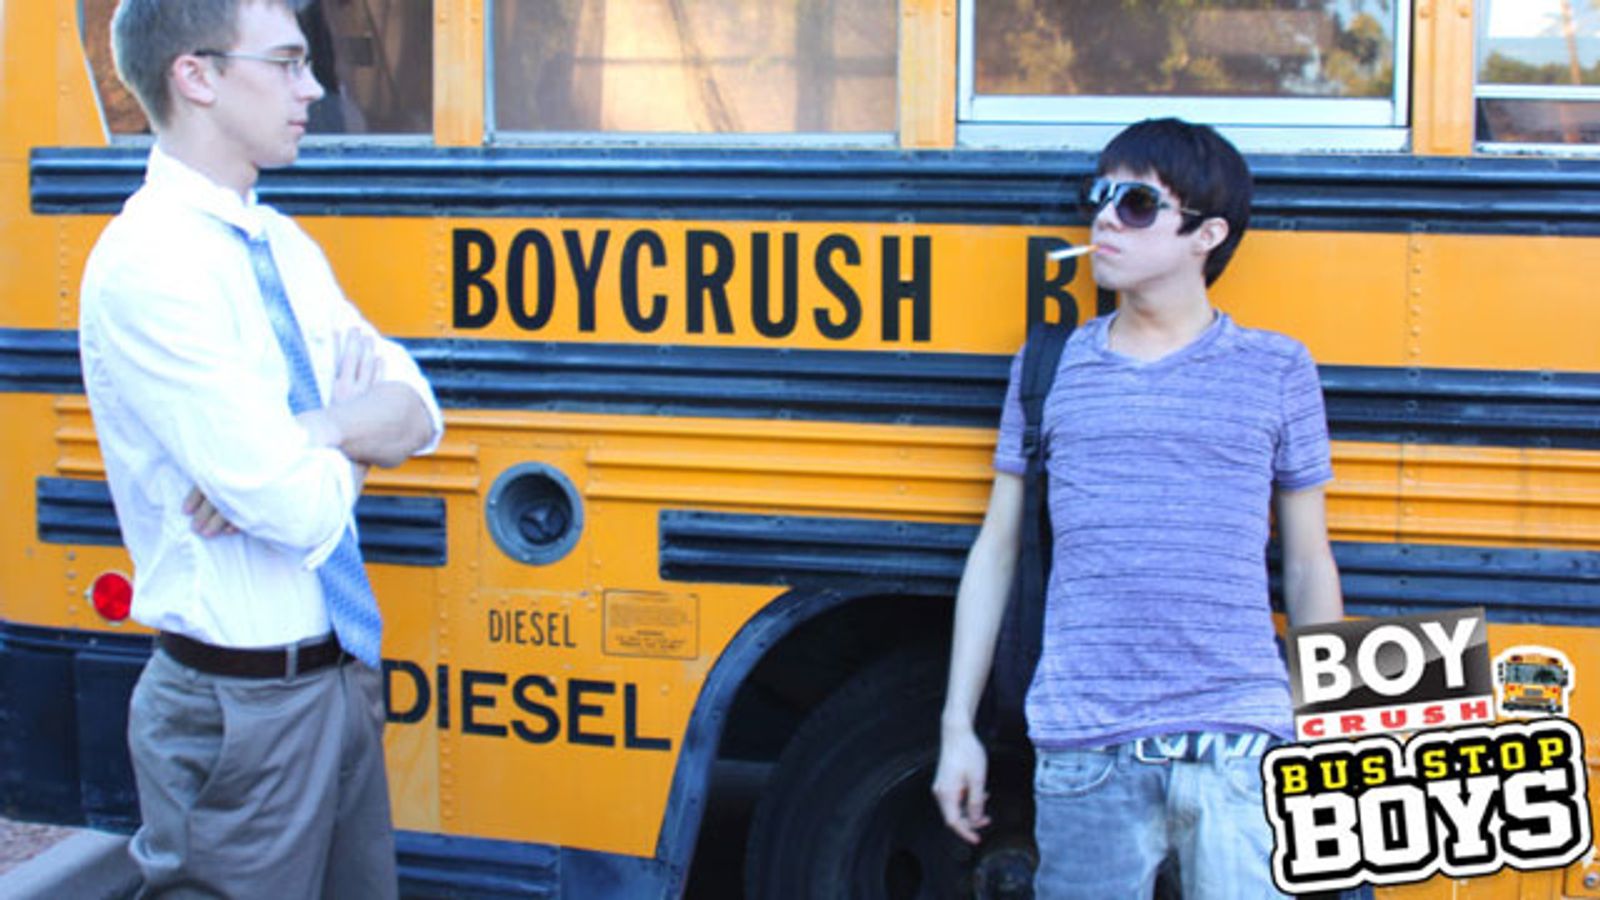 BoyCrush Releases 'Bus Stop Boys'